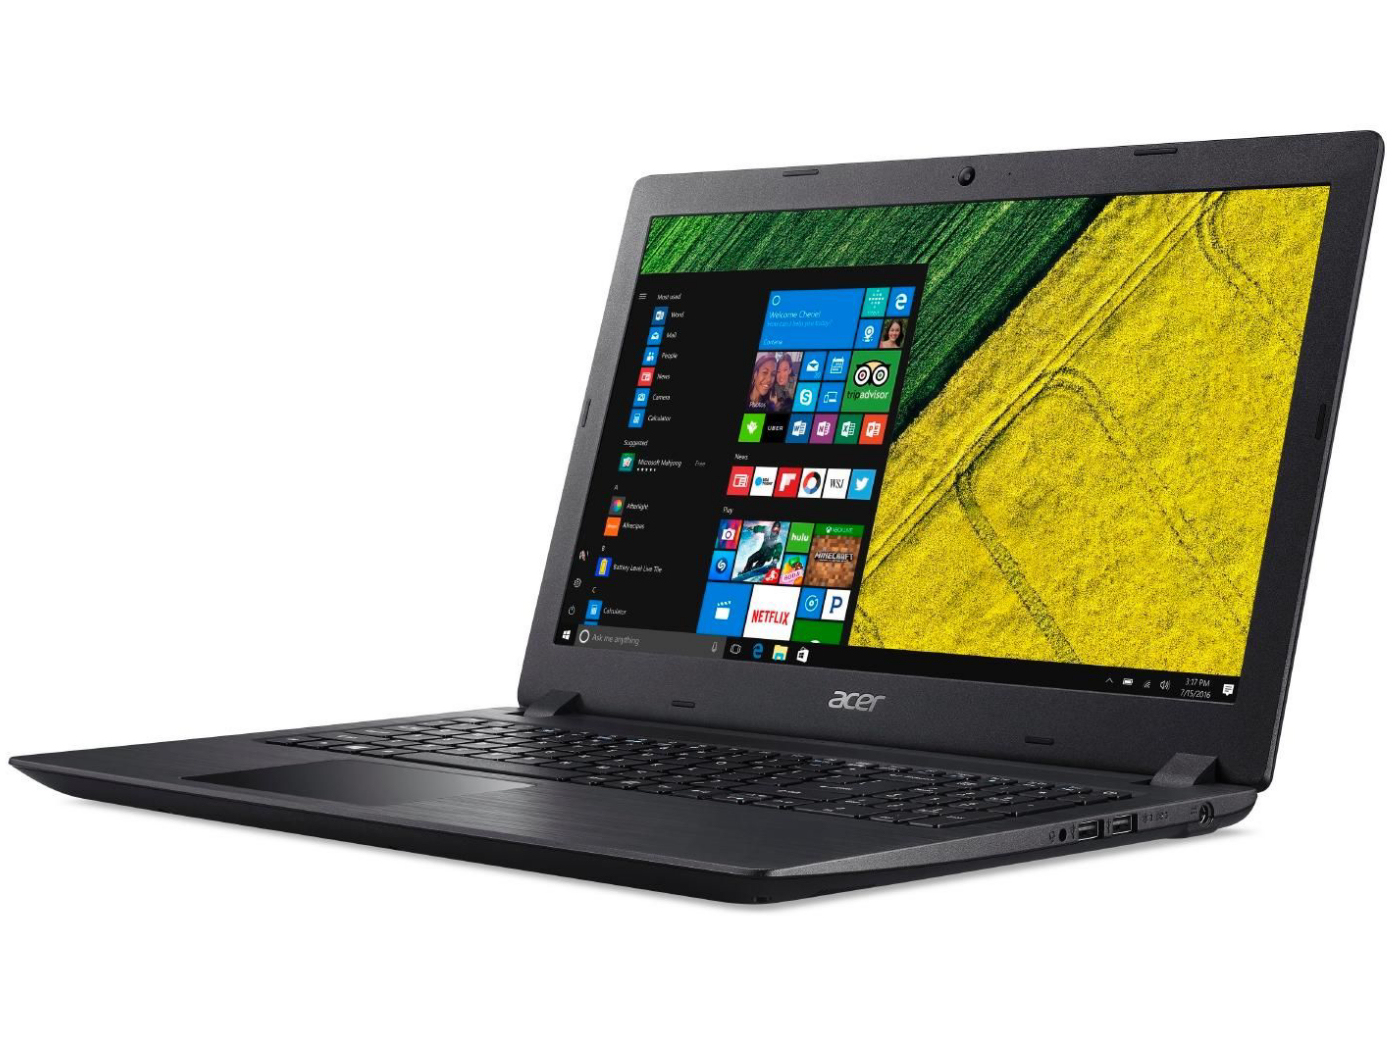 toon Lil Welkom Acer Aspire 3 A315-21 (A6-9220, Radeon R4) Laptop Review -  NotebookCheck.net Reviews